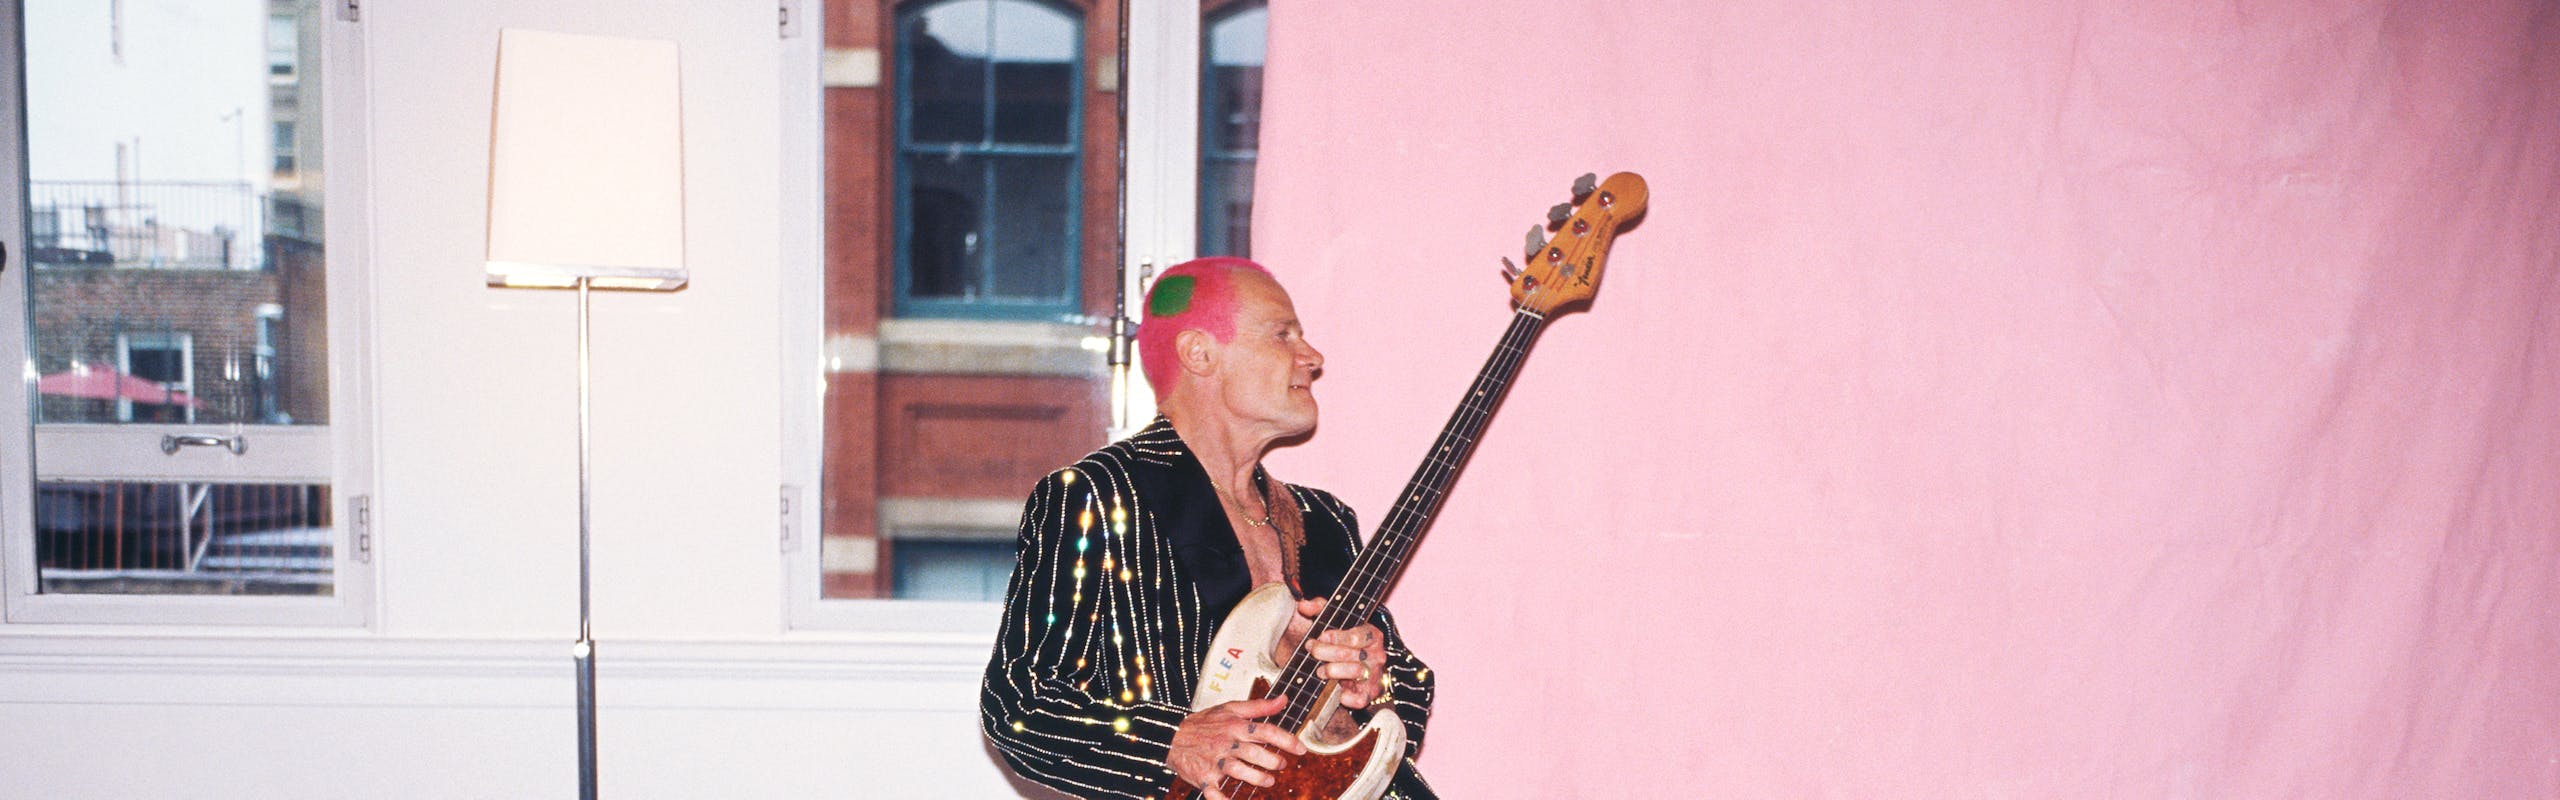 Flea dei Red Hot Chili Peppers indossa la nuova collab Styssy x Dries Van Noten